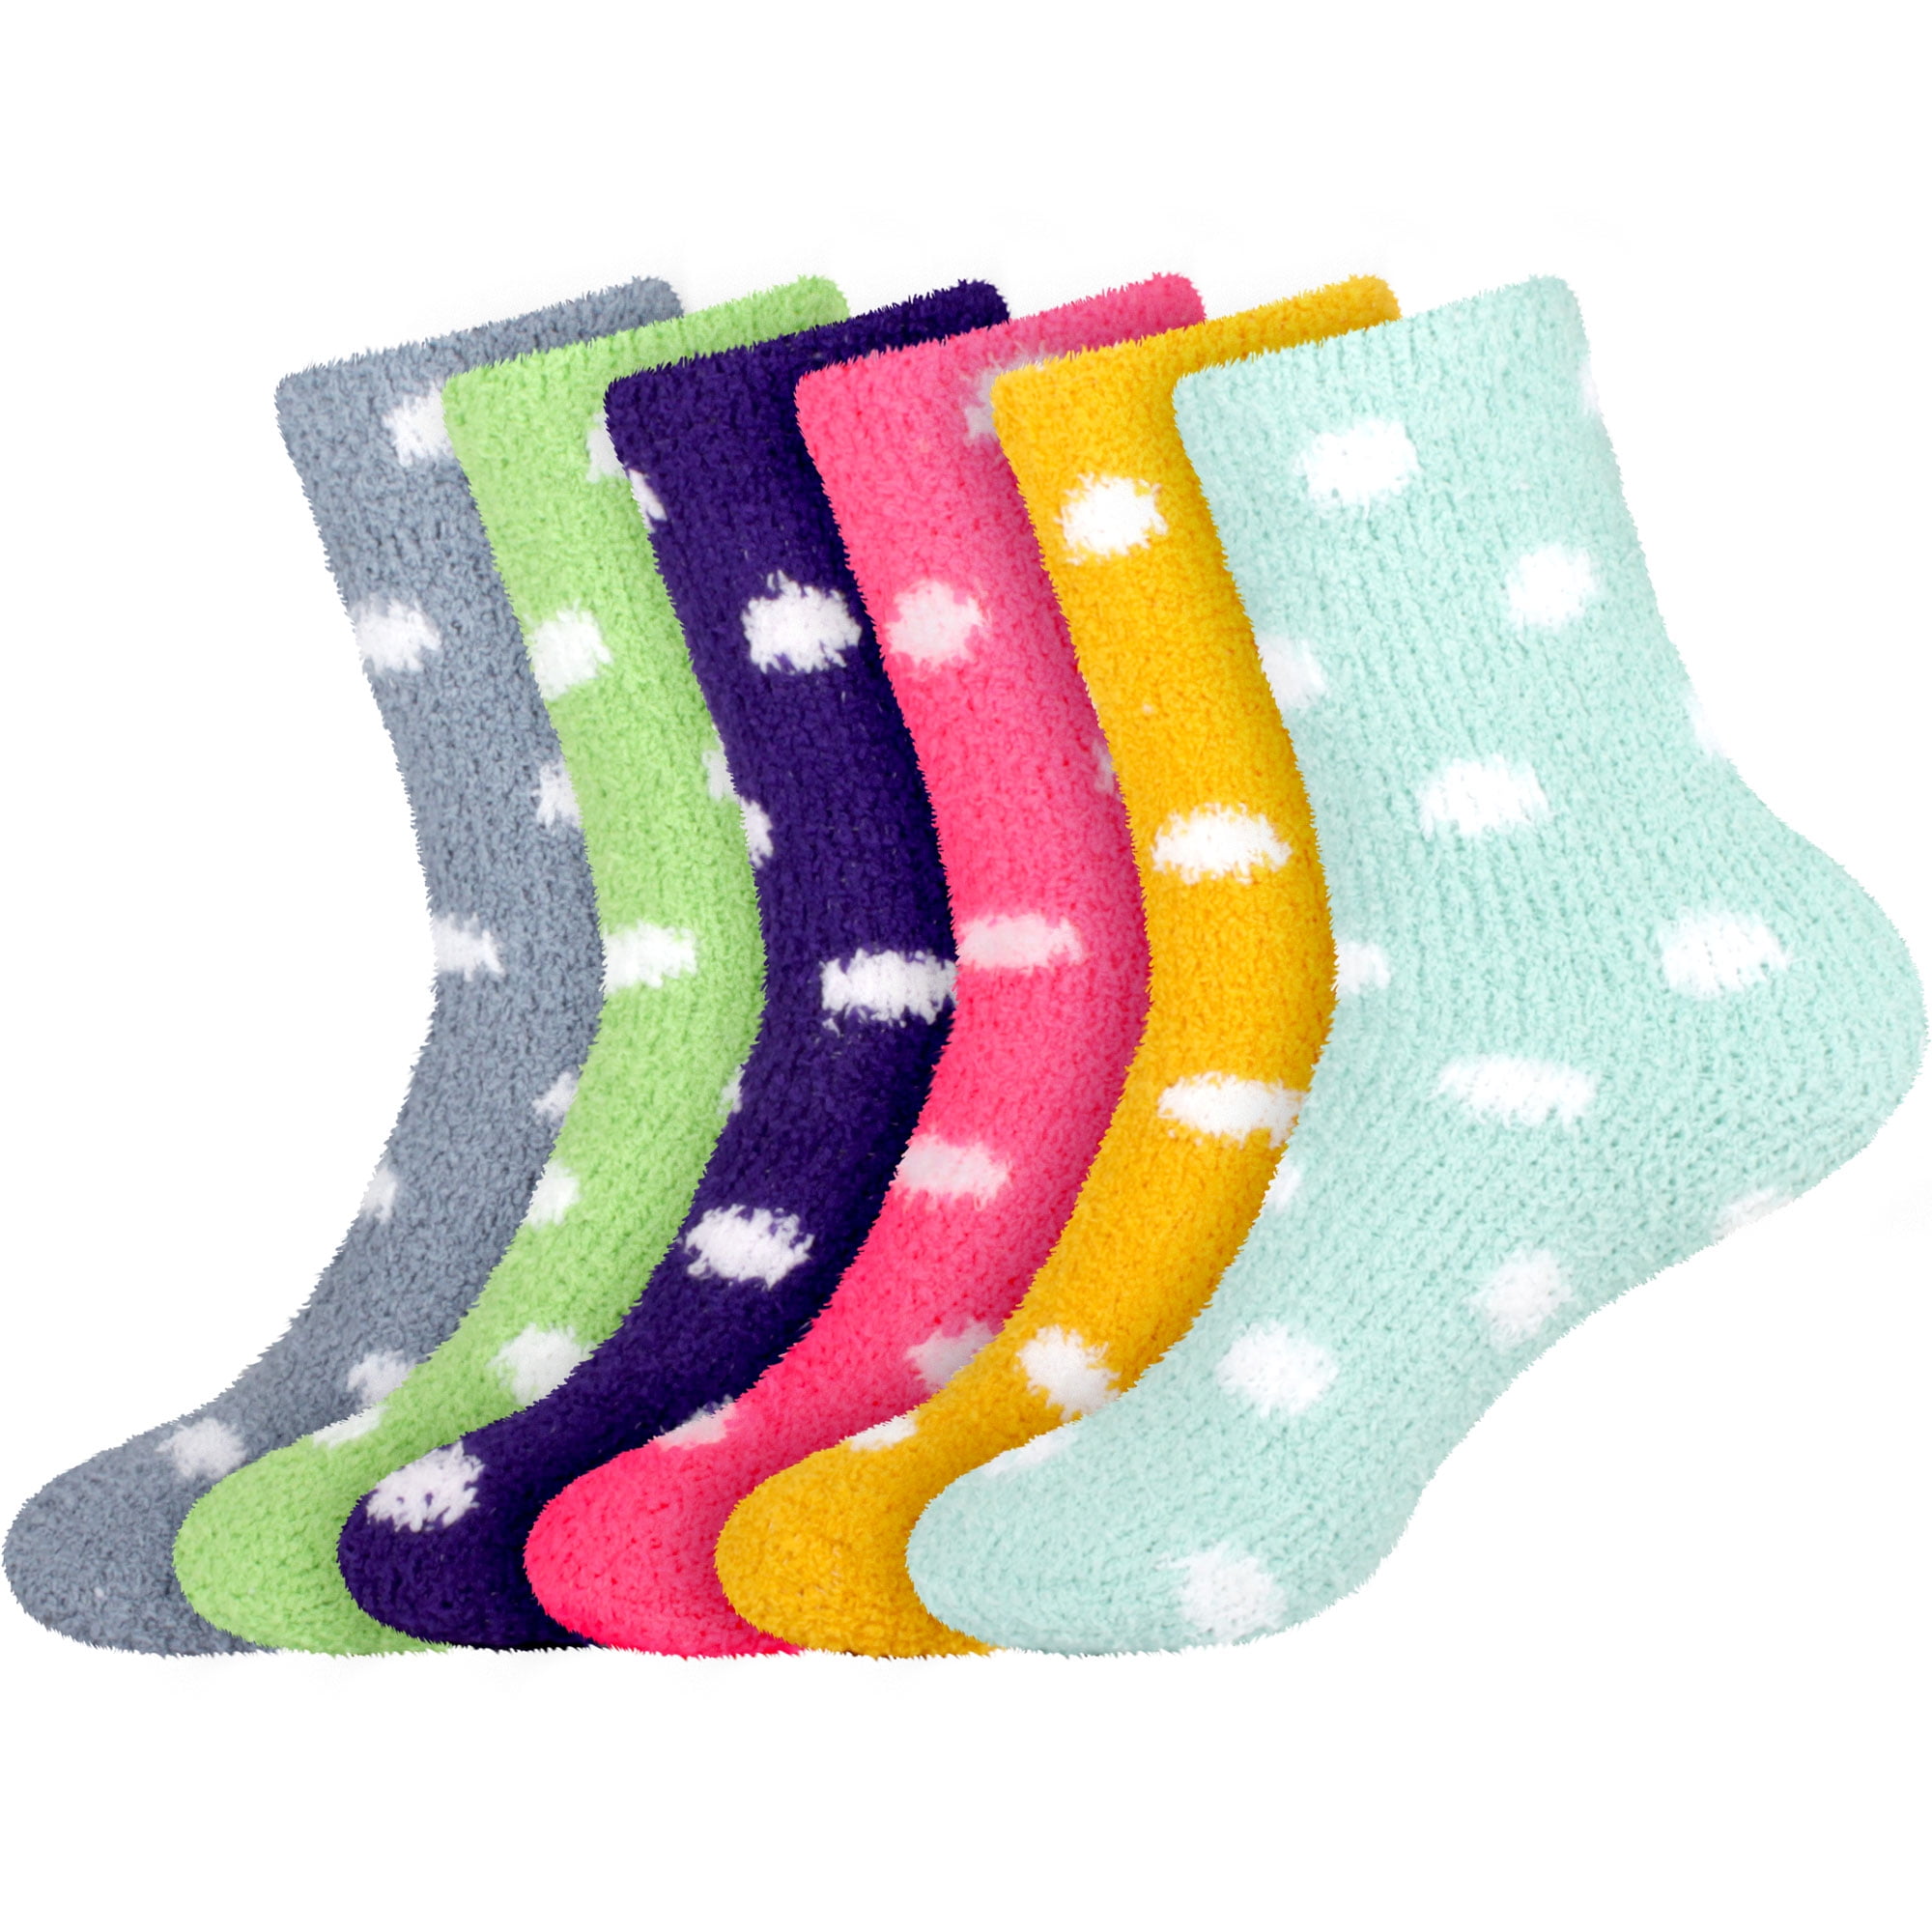 Women's Super Soft Warm Comfy Fuzzy Fluffy Plush Cozy Cute Polka Dots Socks  - Assortment F - 6 Pairs 